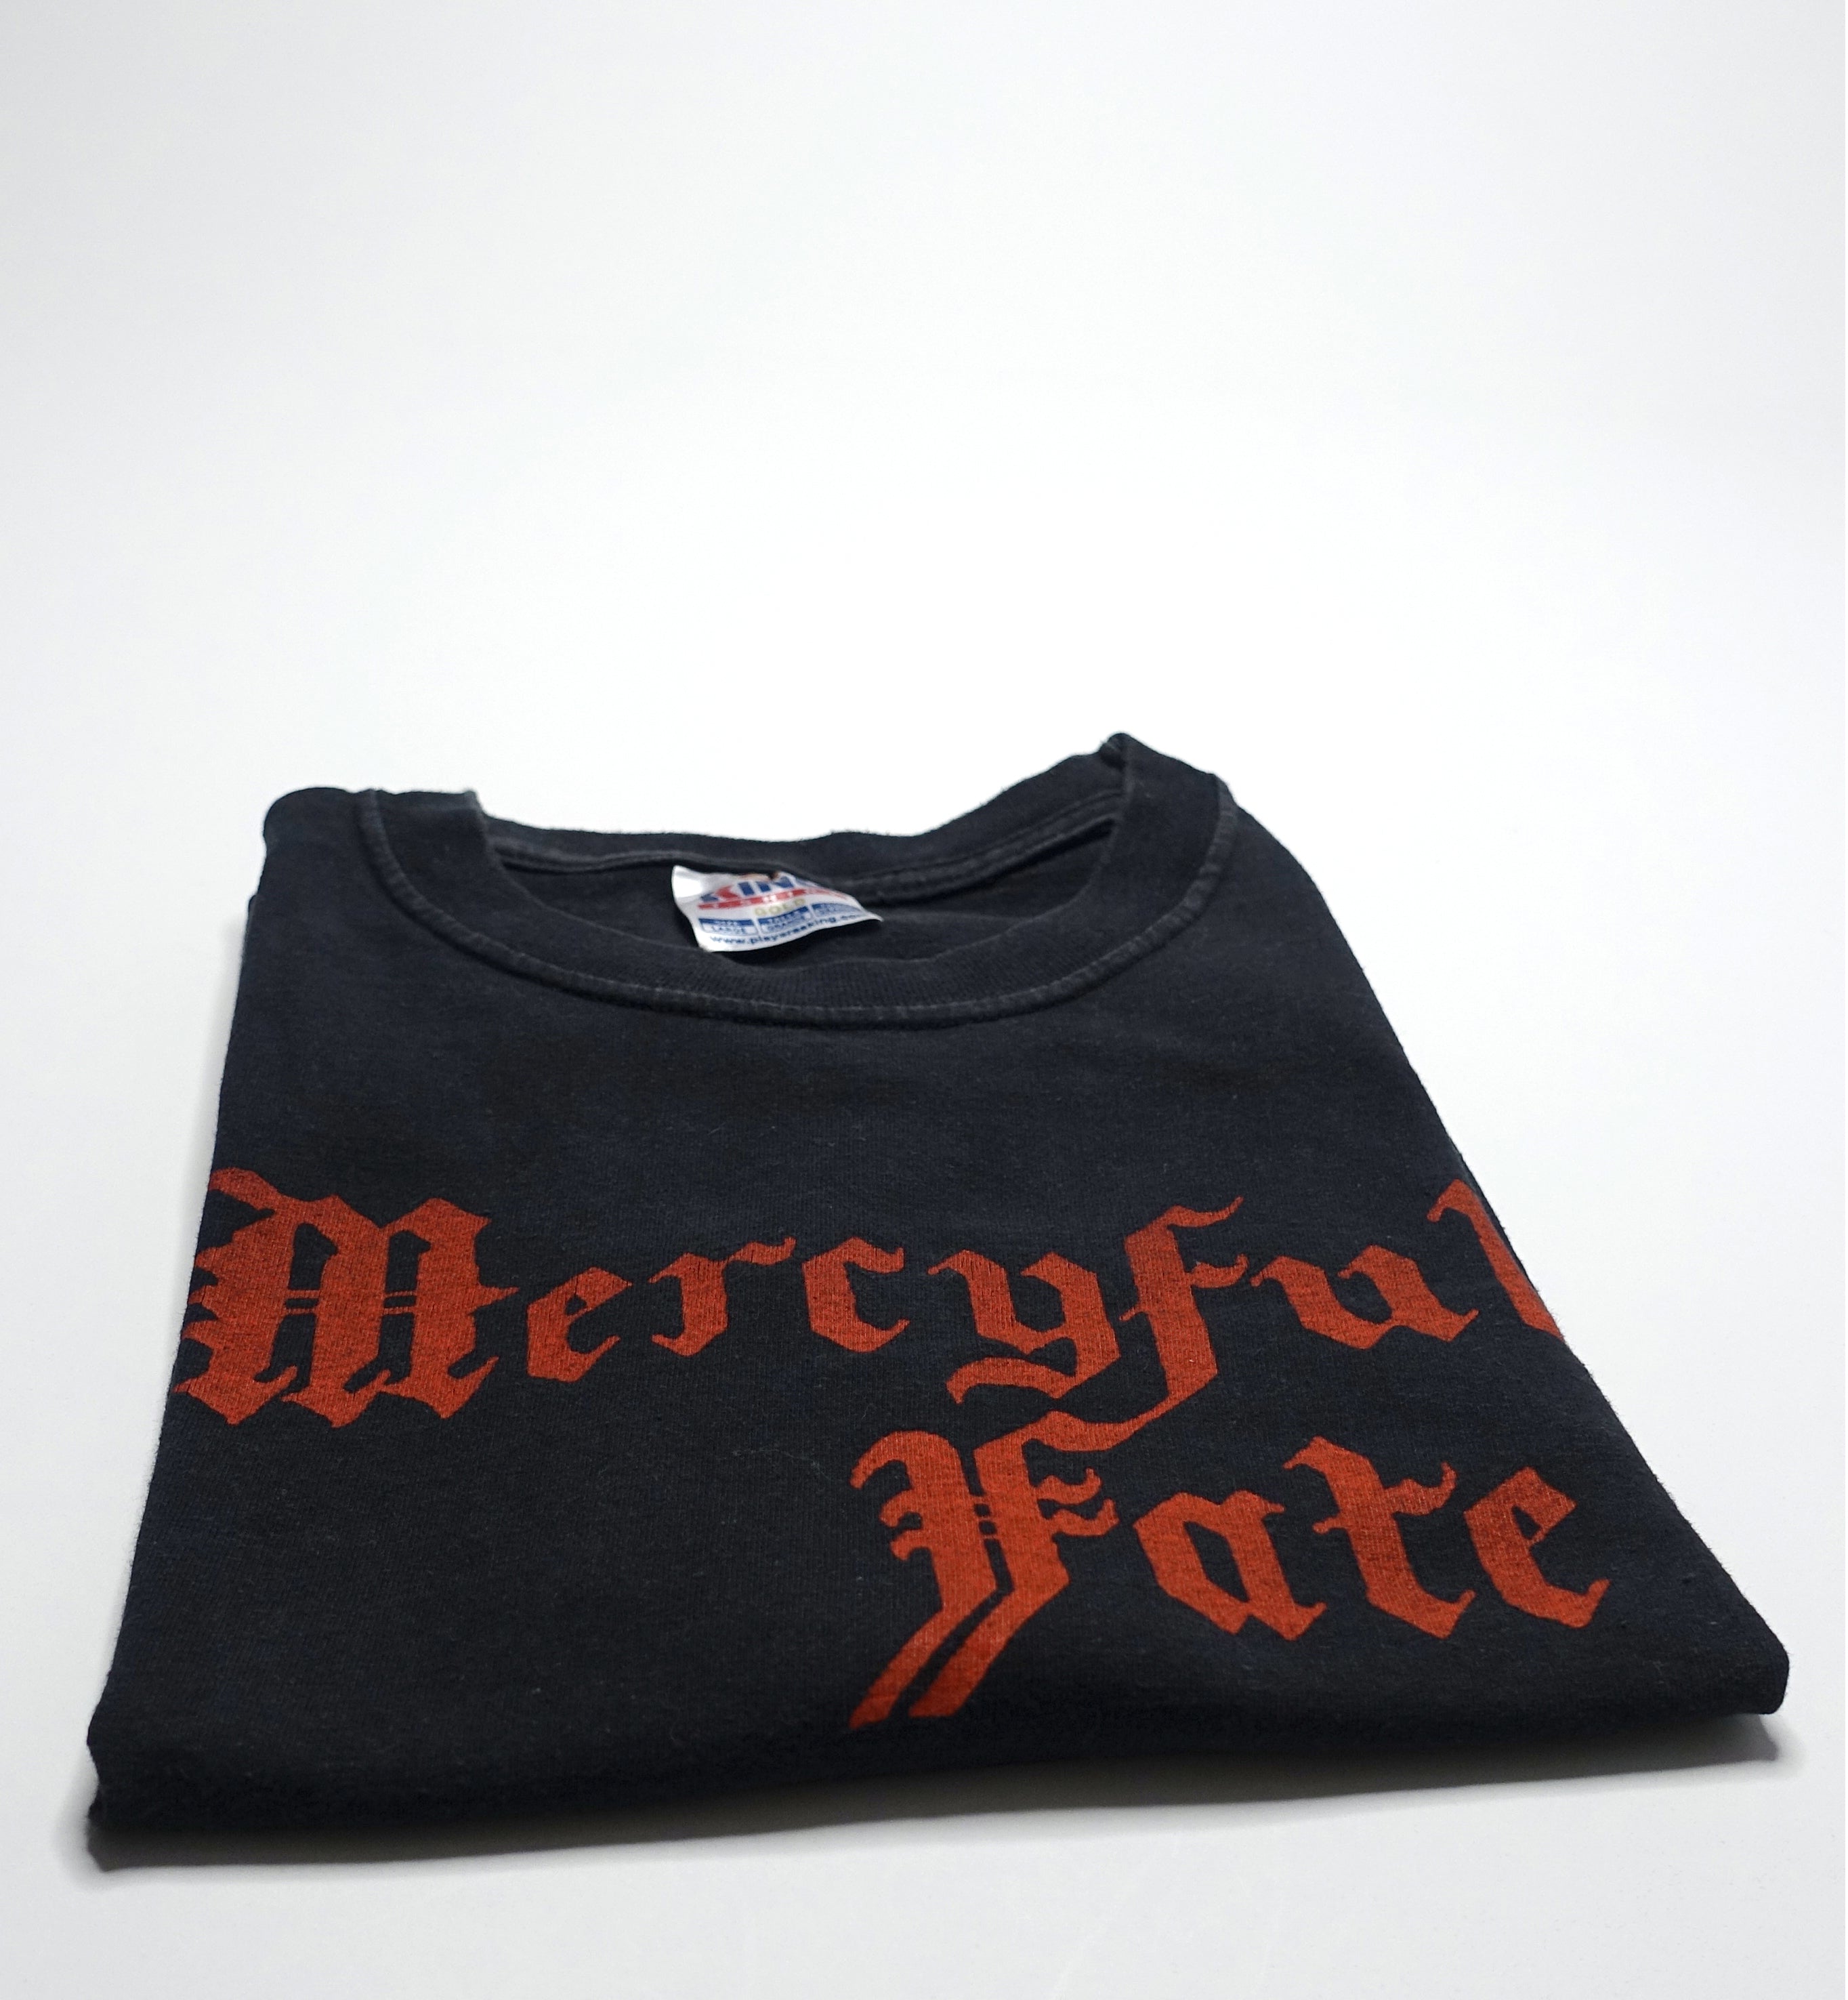 Mercyful Fate – Melissa Tour Shirt Size Large